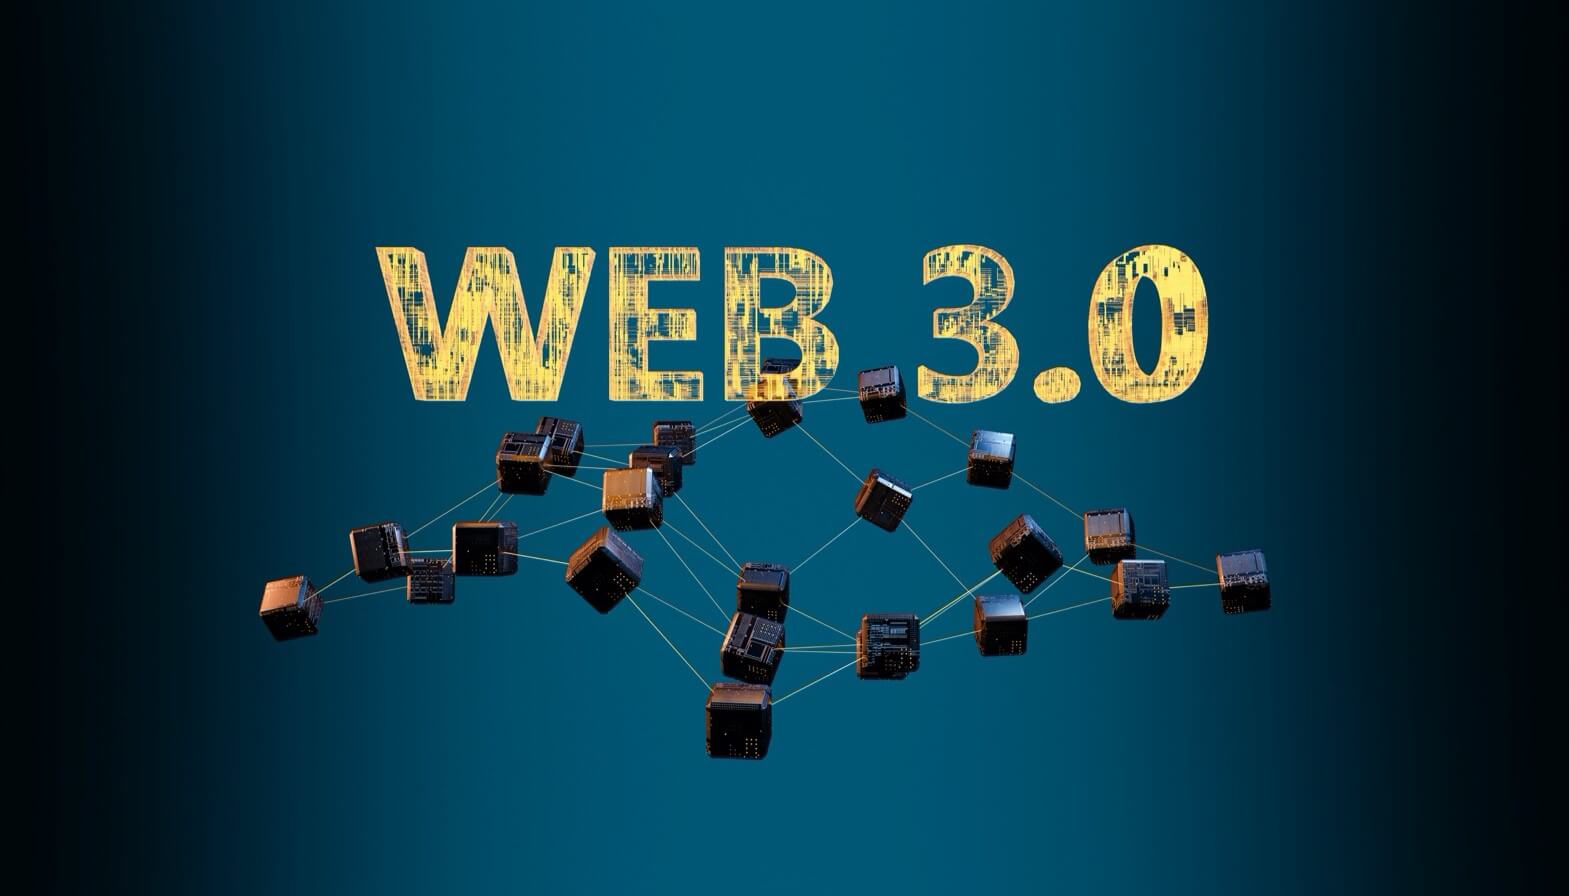 arastirmaya gore web3 pazari 2030da 815 milyar dolara ulasacak